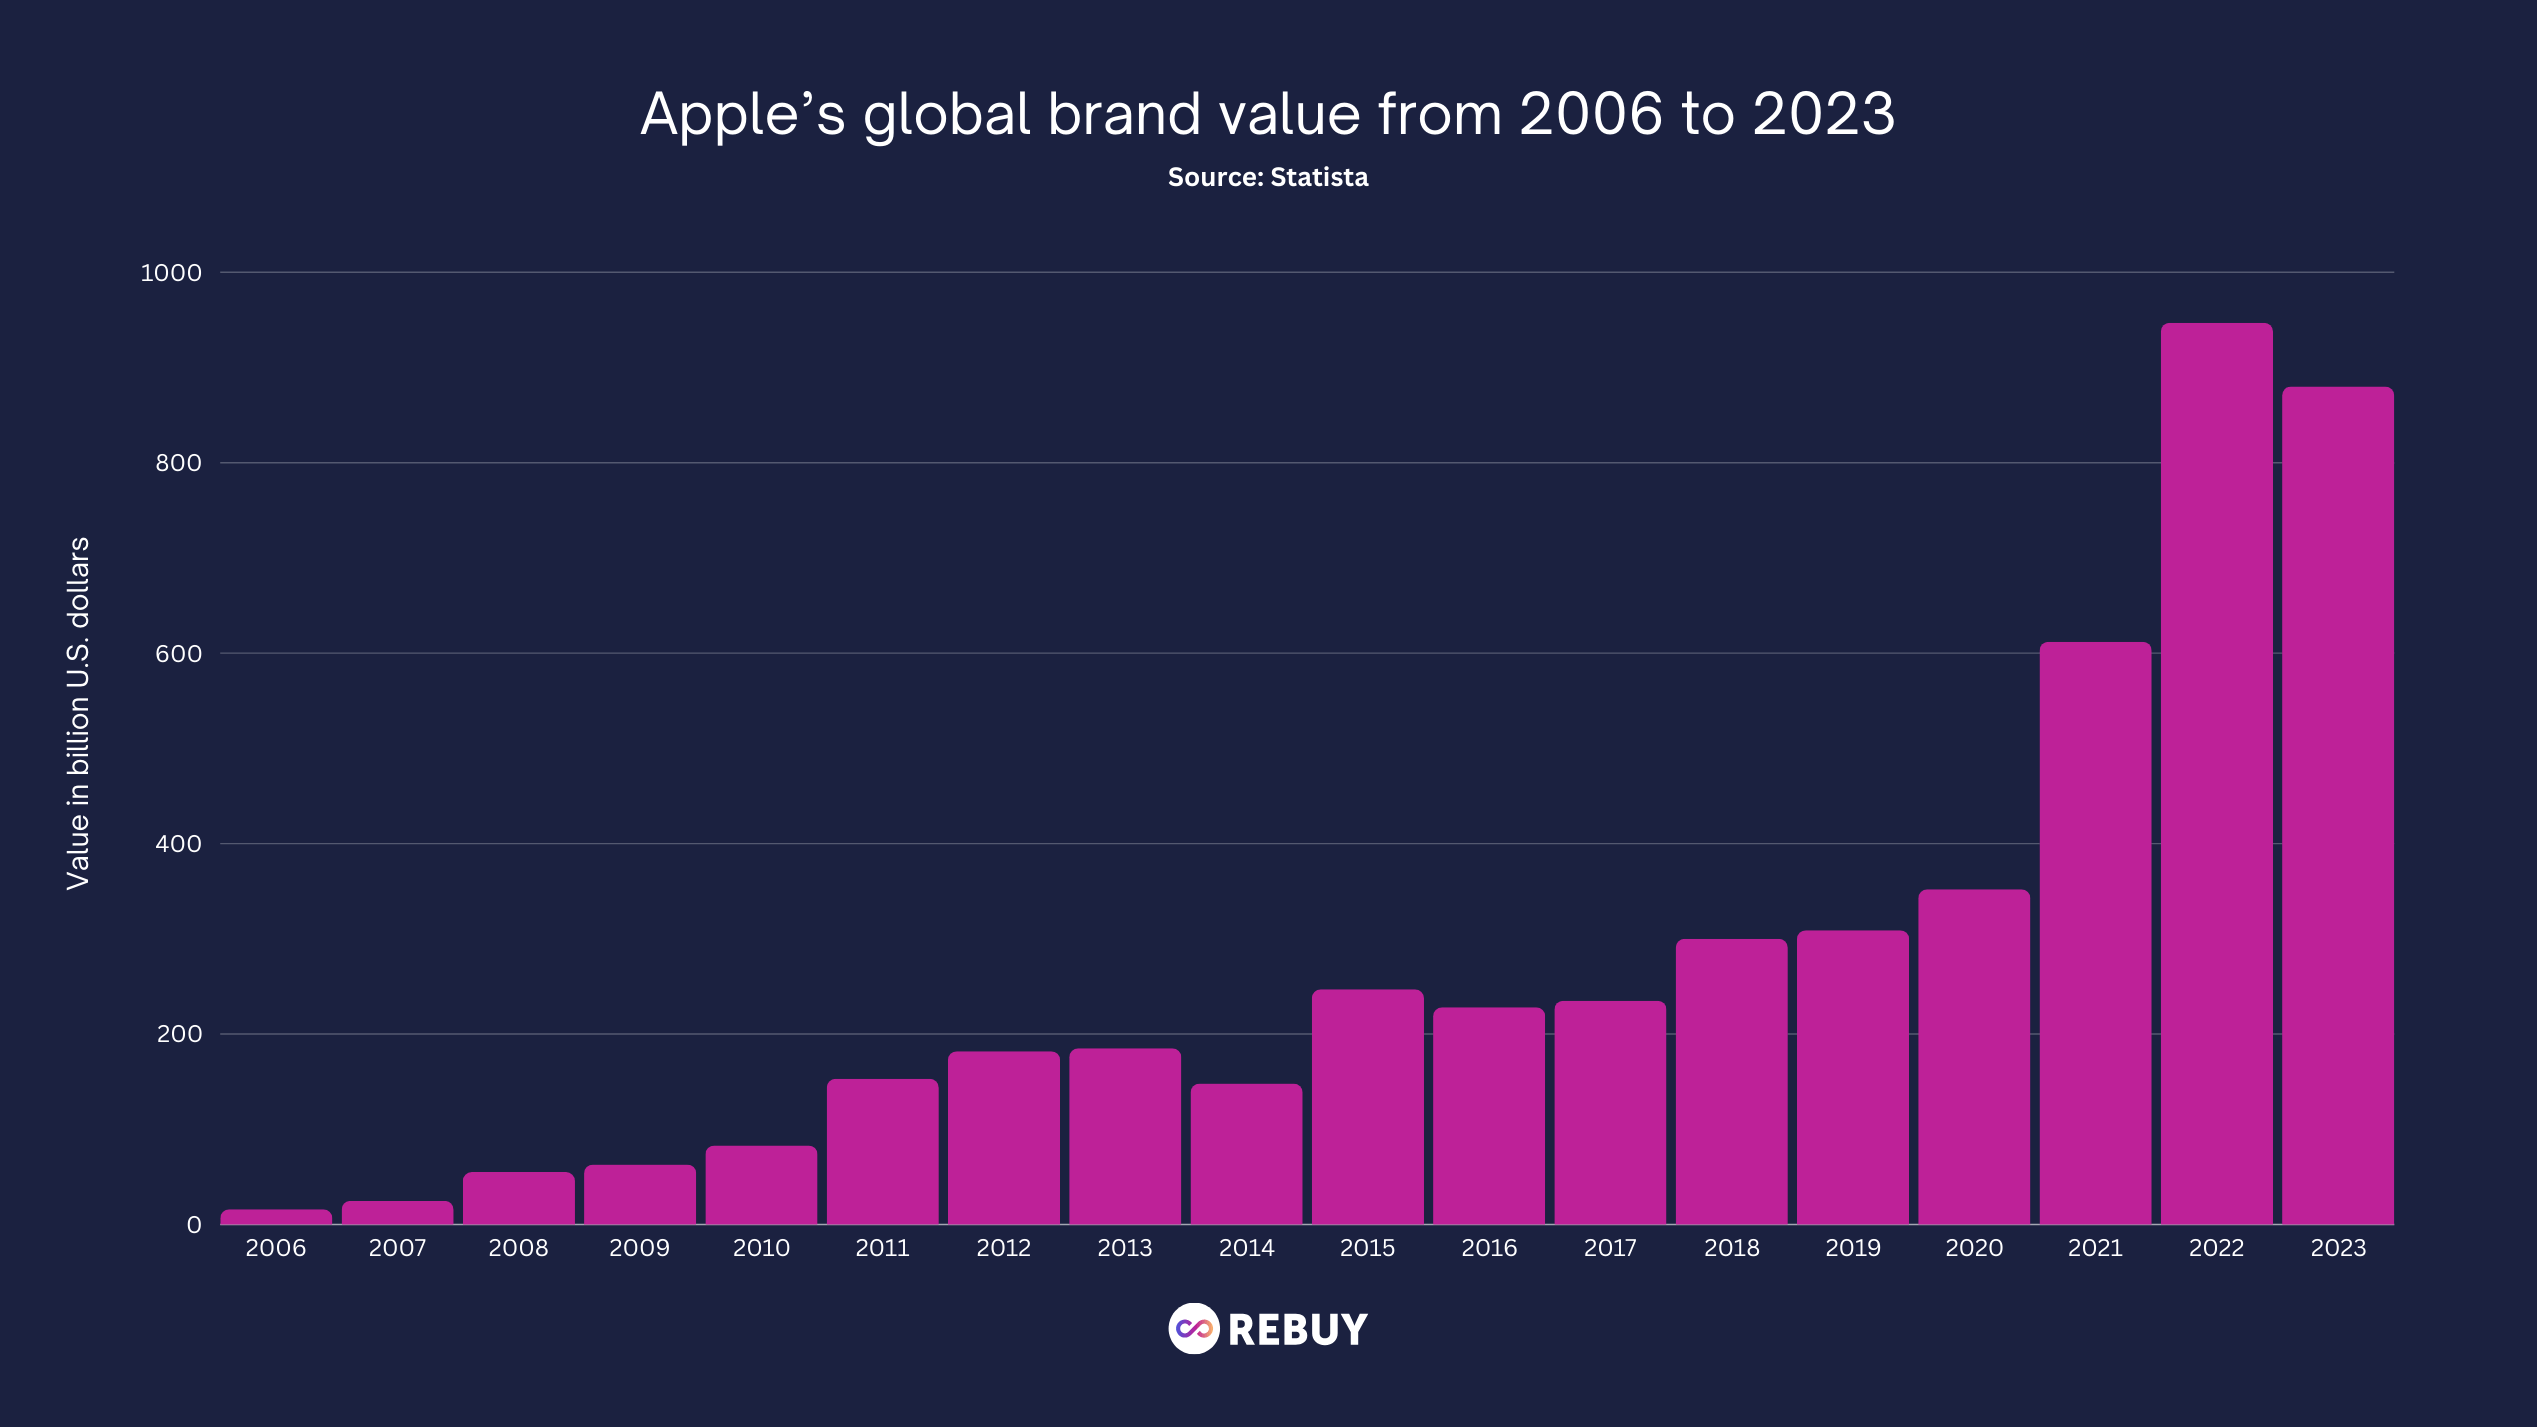 Apples global brand value graph